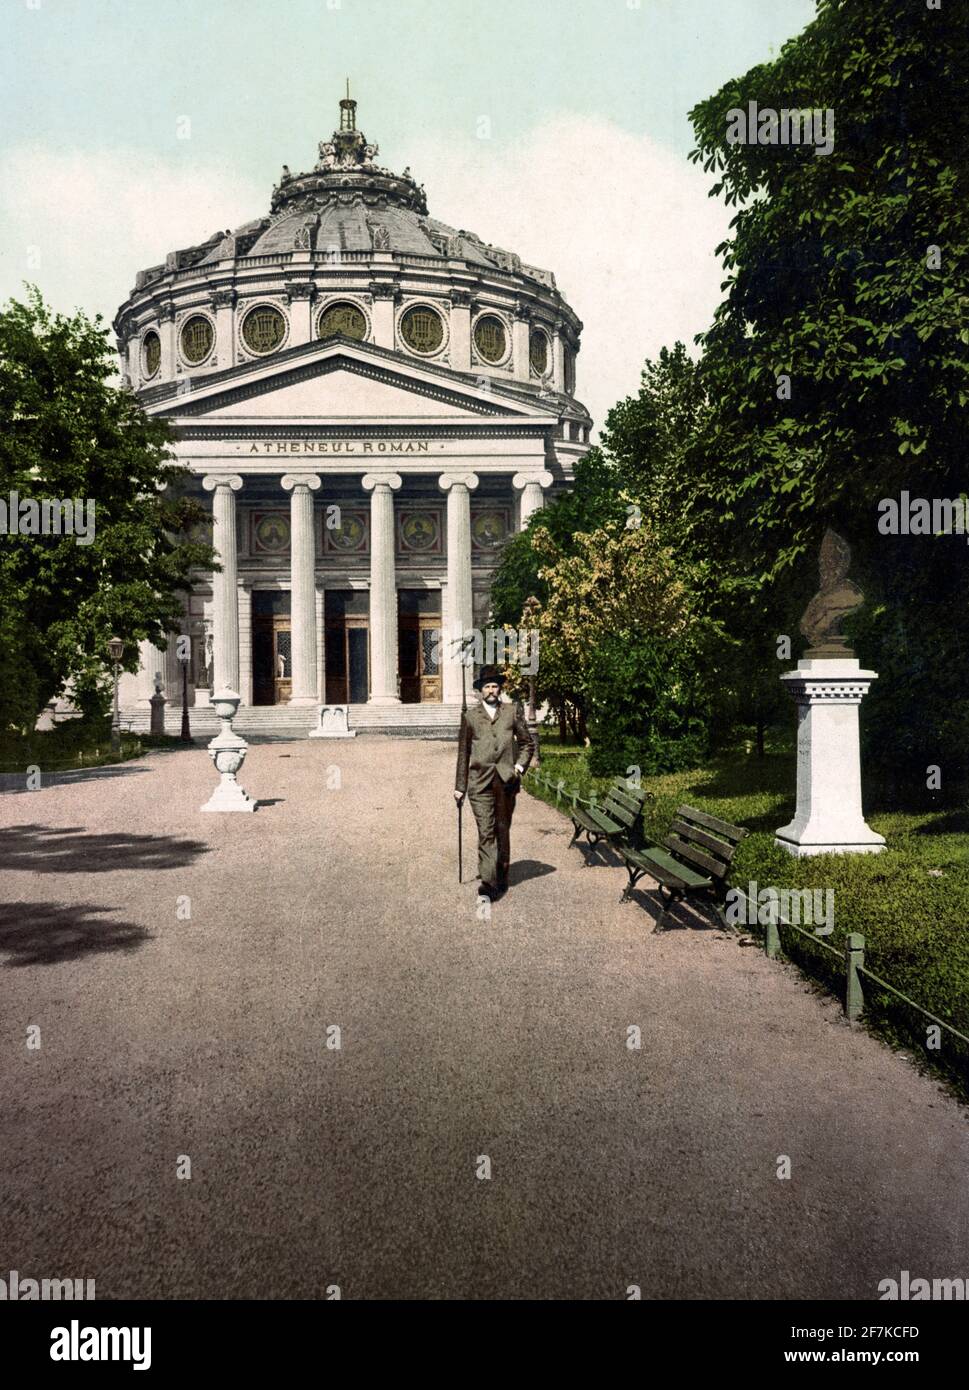 Bukarest Atheneum - Roumania Bukharest Athenum, circa 1900 Stock Photo